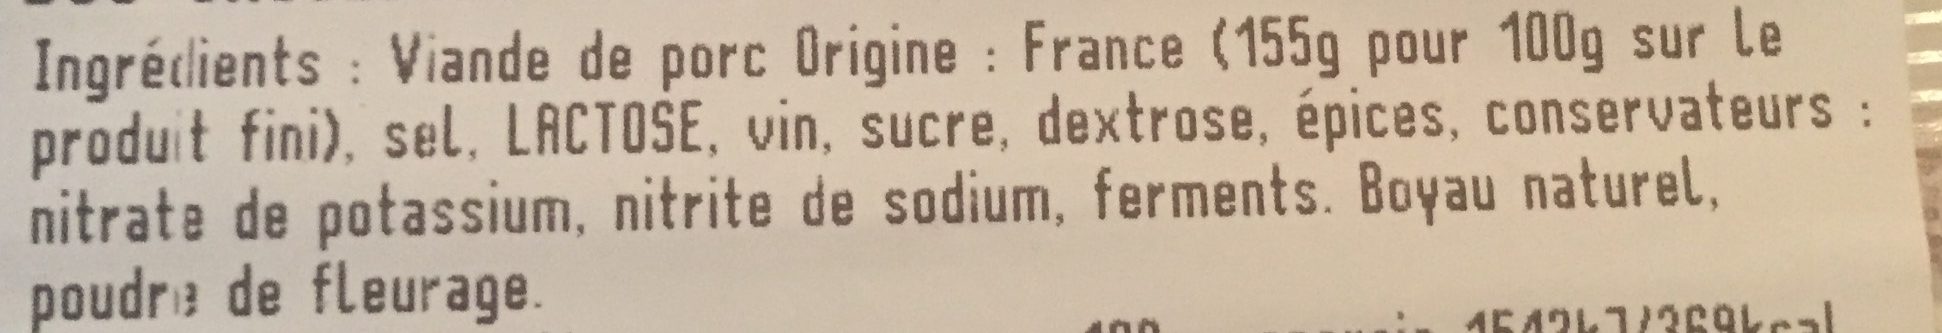 Saucisse seche - Ingredients - fr